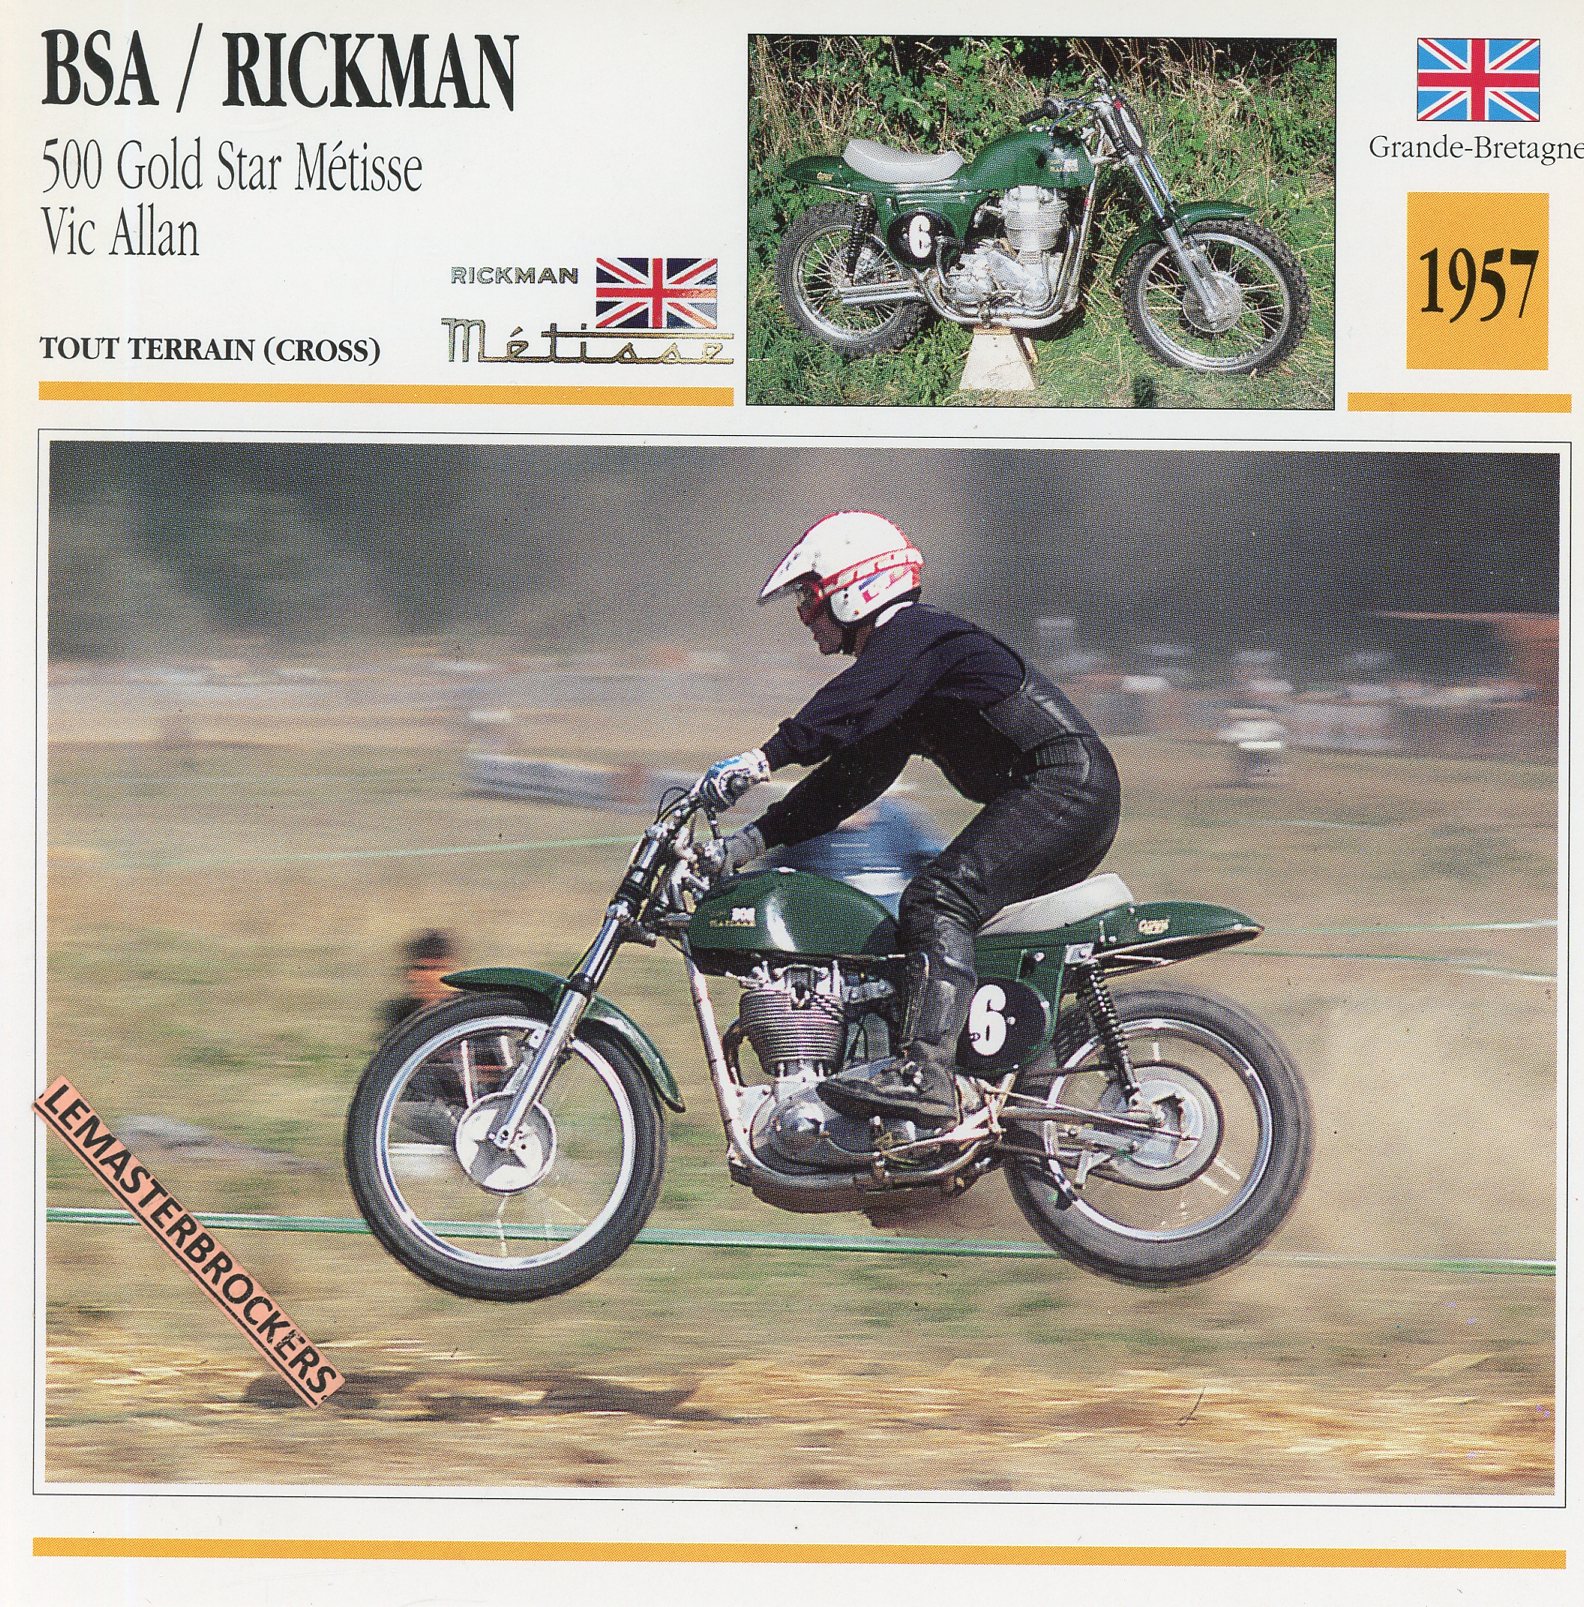 BSA-RICKMAN-500-GOLDSTAR-METISSE-VIC-ALLAN-1957-FICHE-MOTO-LEMASTERBROCKERS